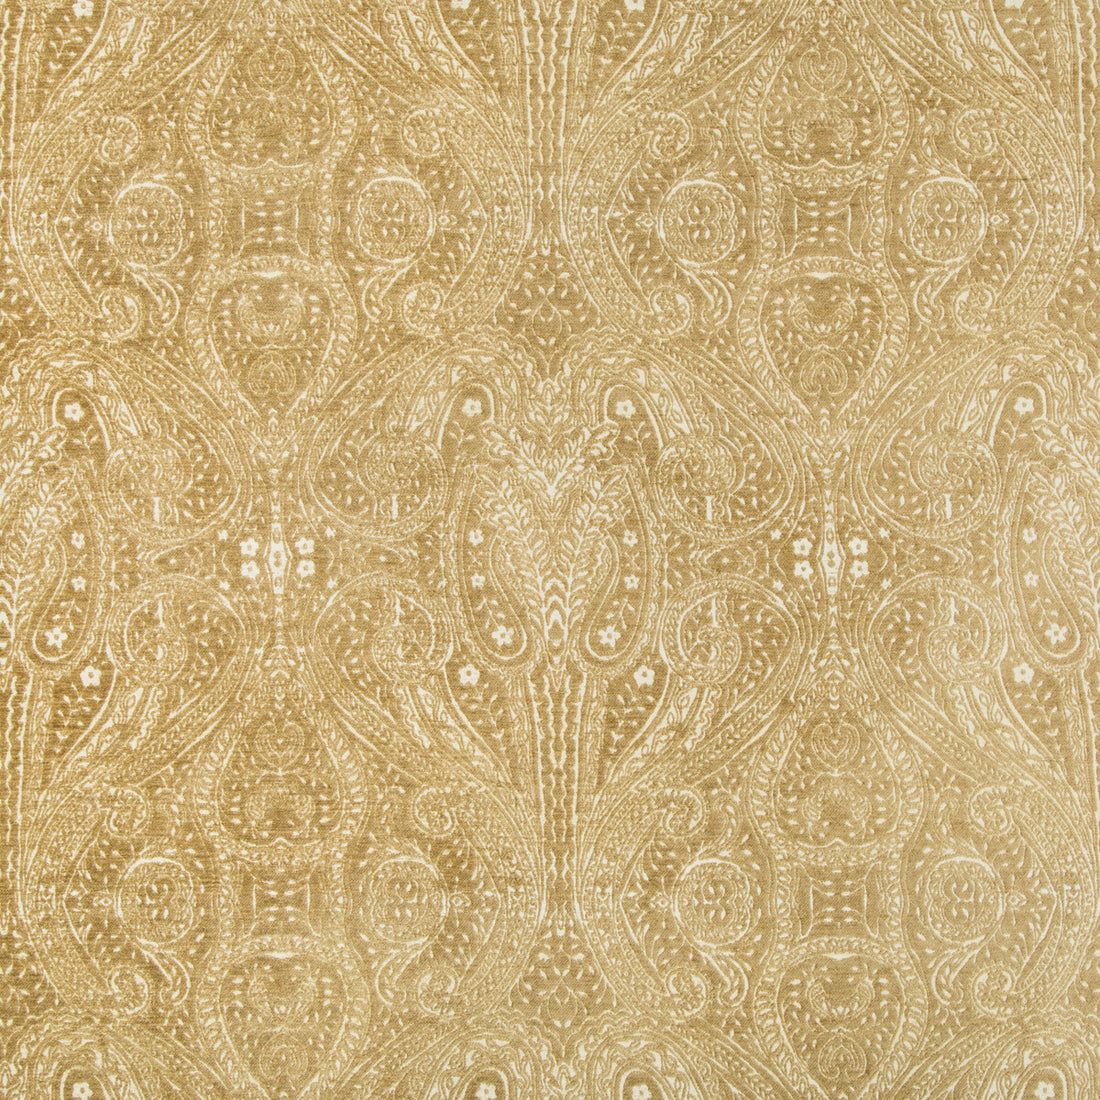 Kravet Design fabric in 34720-416 color - pattern 34720.416.0 - by Kravet Design in the Gis collection